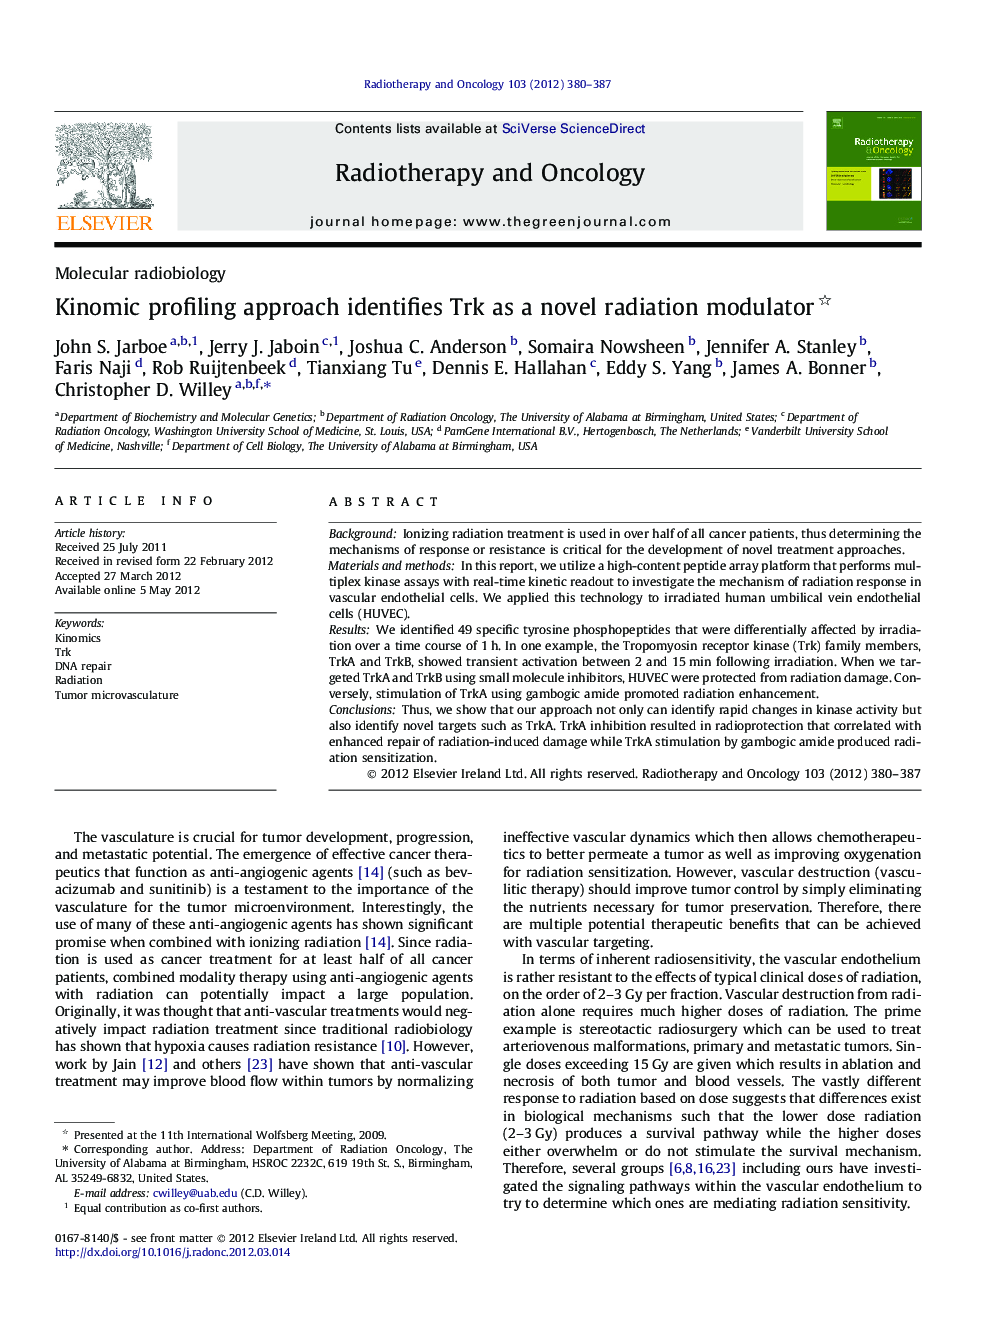 Kinomic profiling approach identifies Trk as a novel radiation modulator 